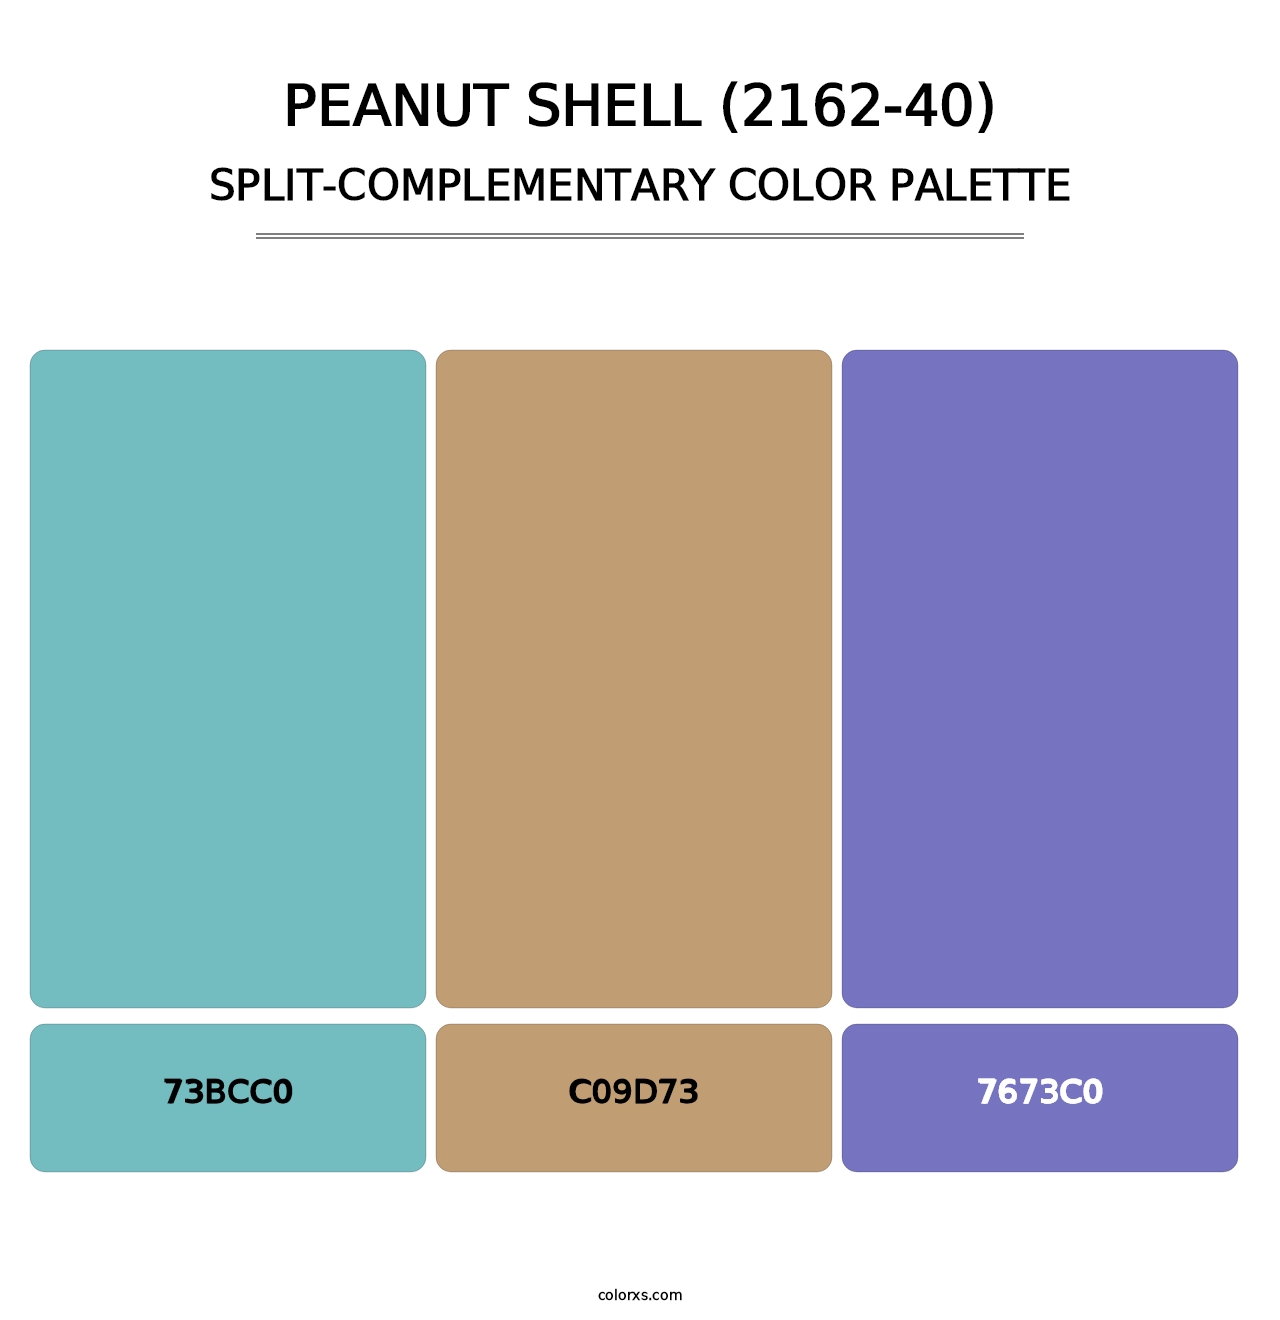 Peanut Shell (2162-40) - Split-Complementary Color Palette